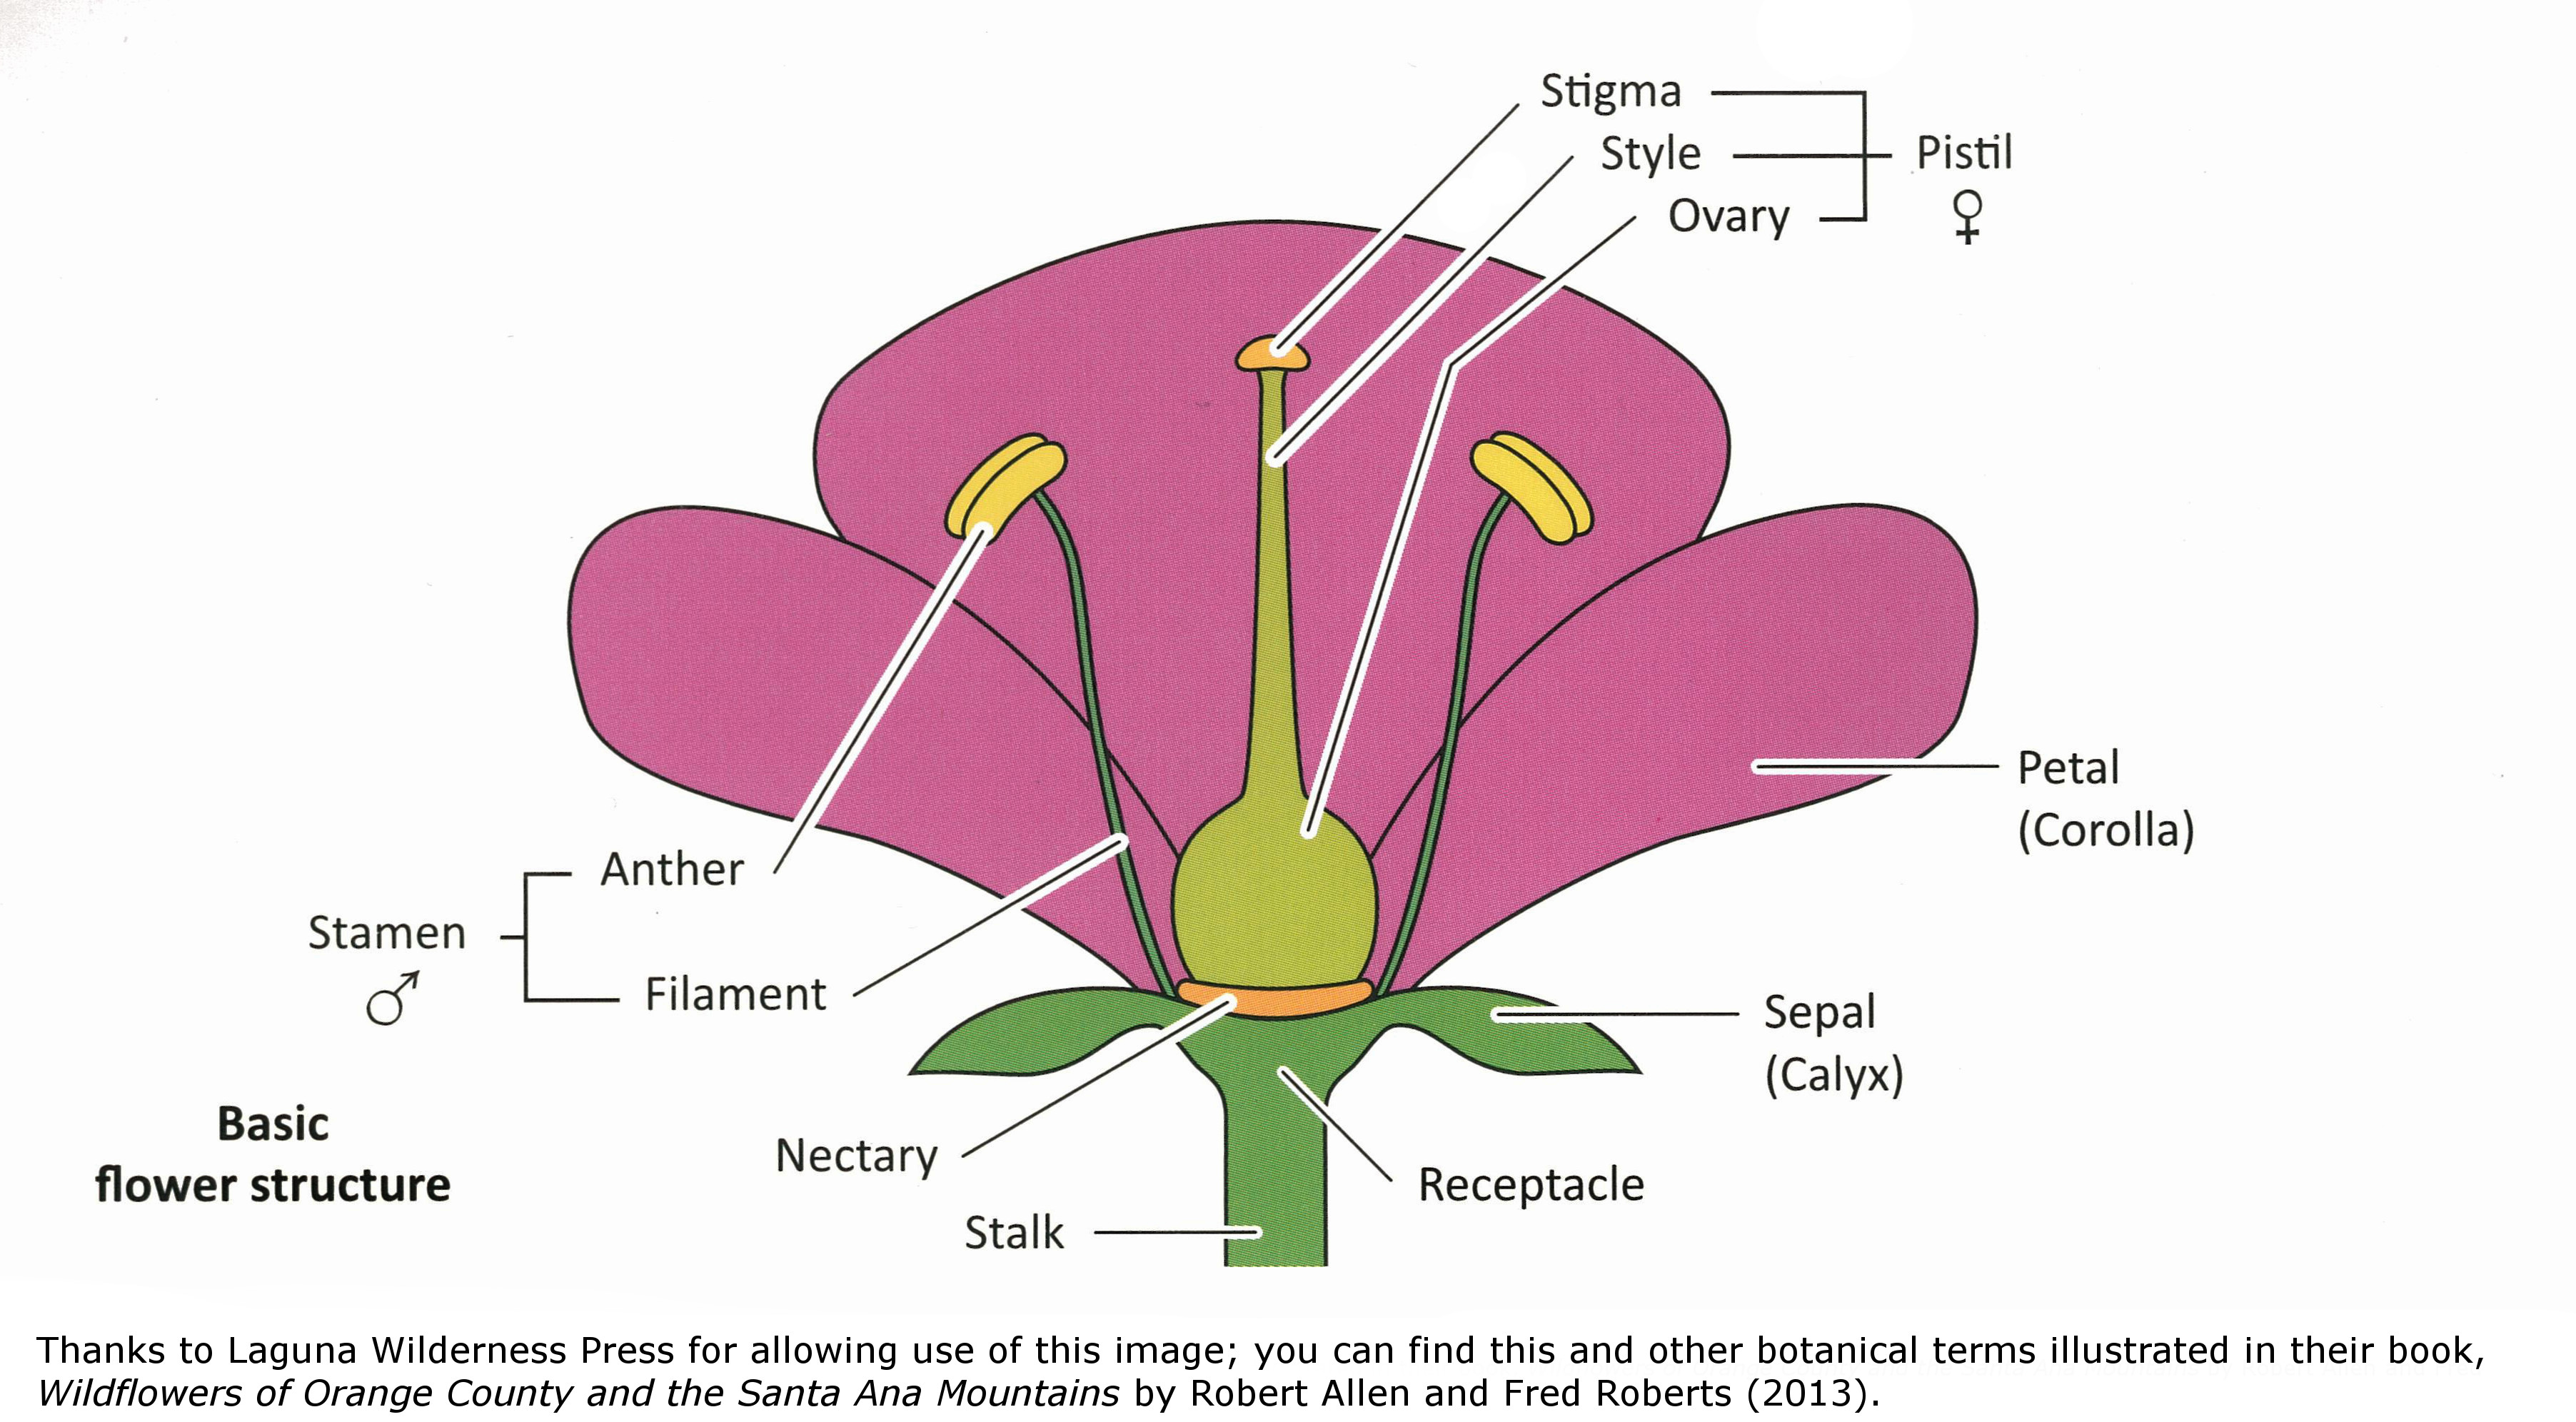 Stigma перевод. Flower structure. Каликс растение. Flower structure Biology. Стигмы у растений.